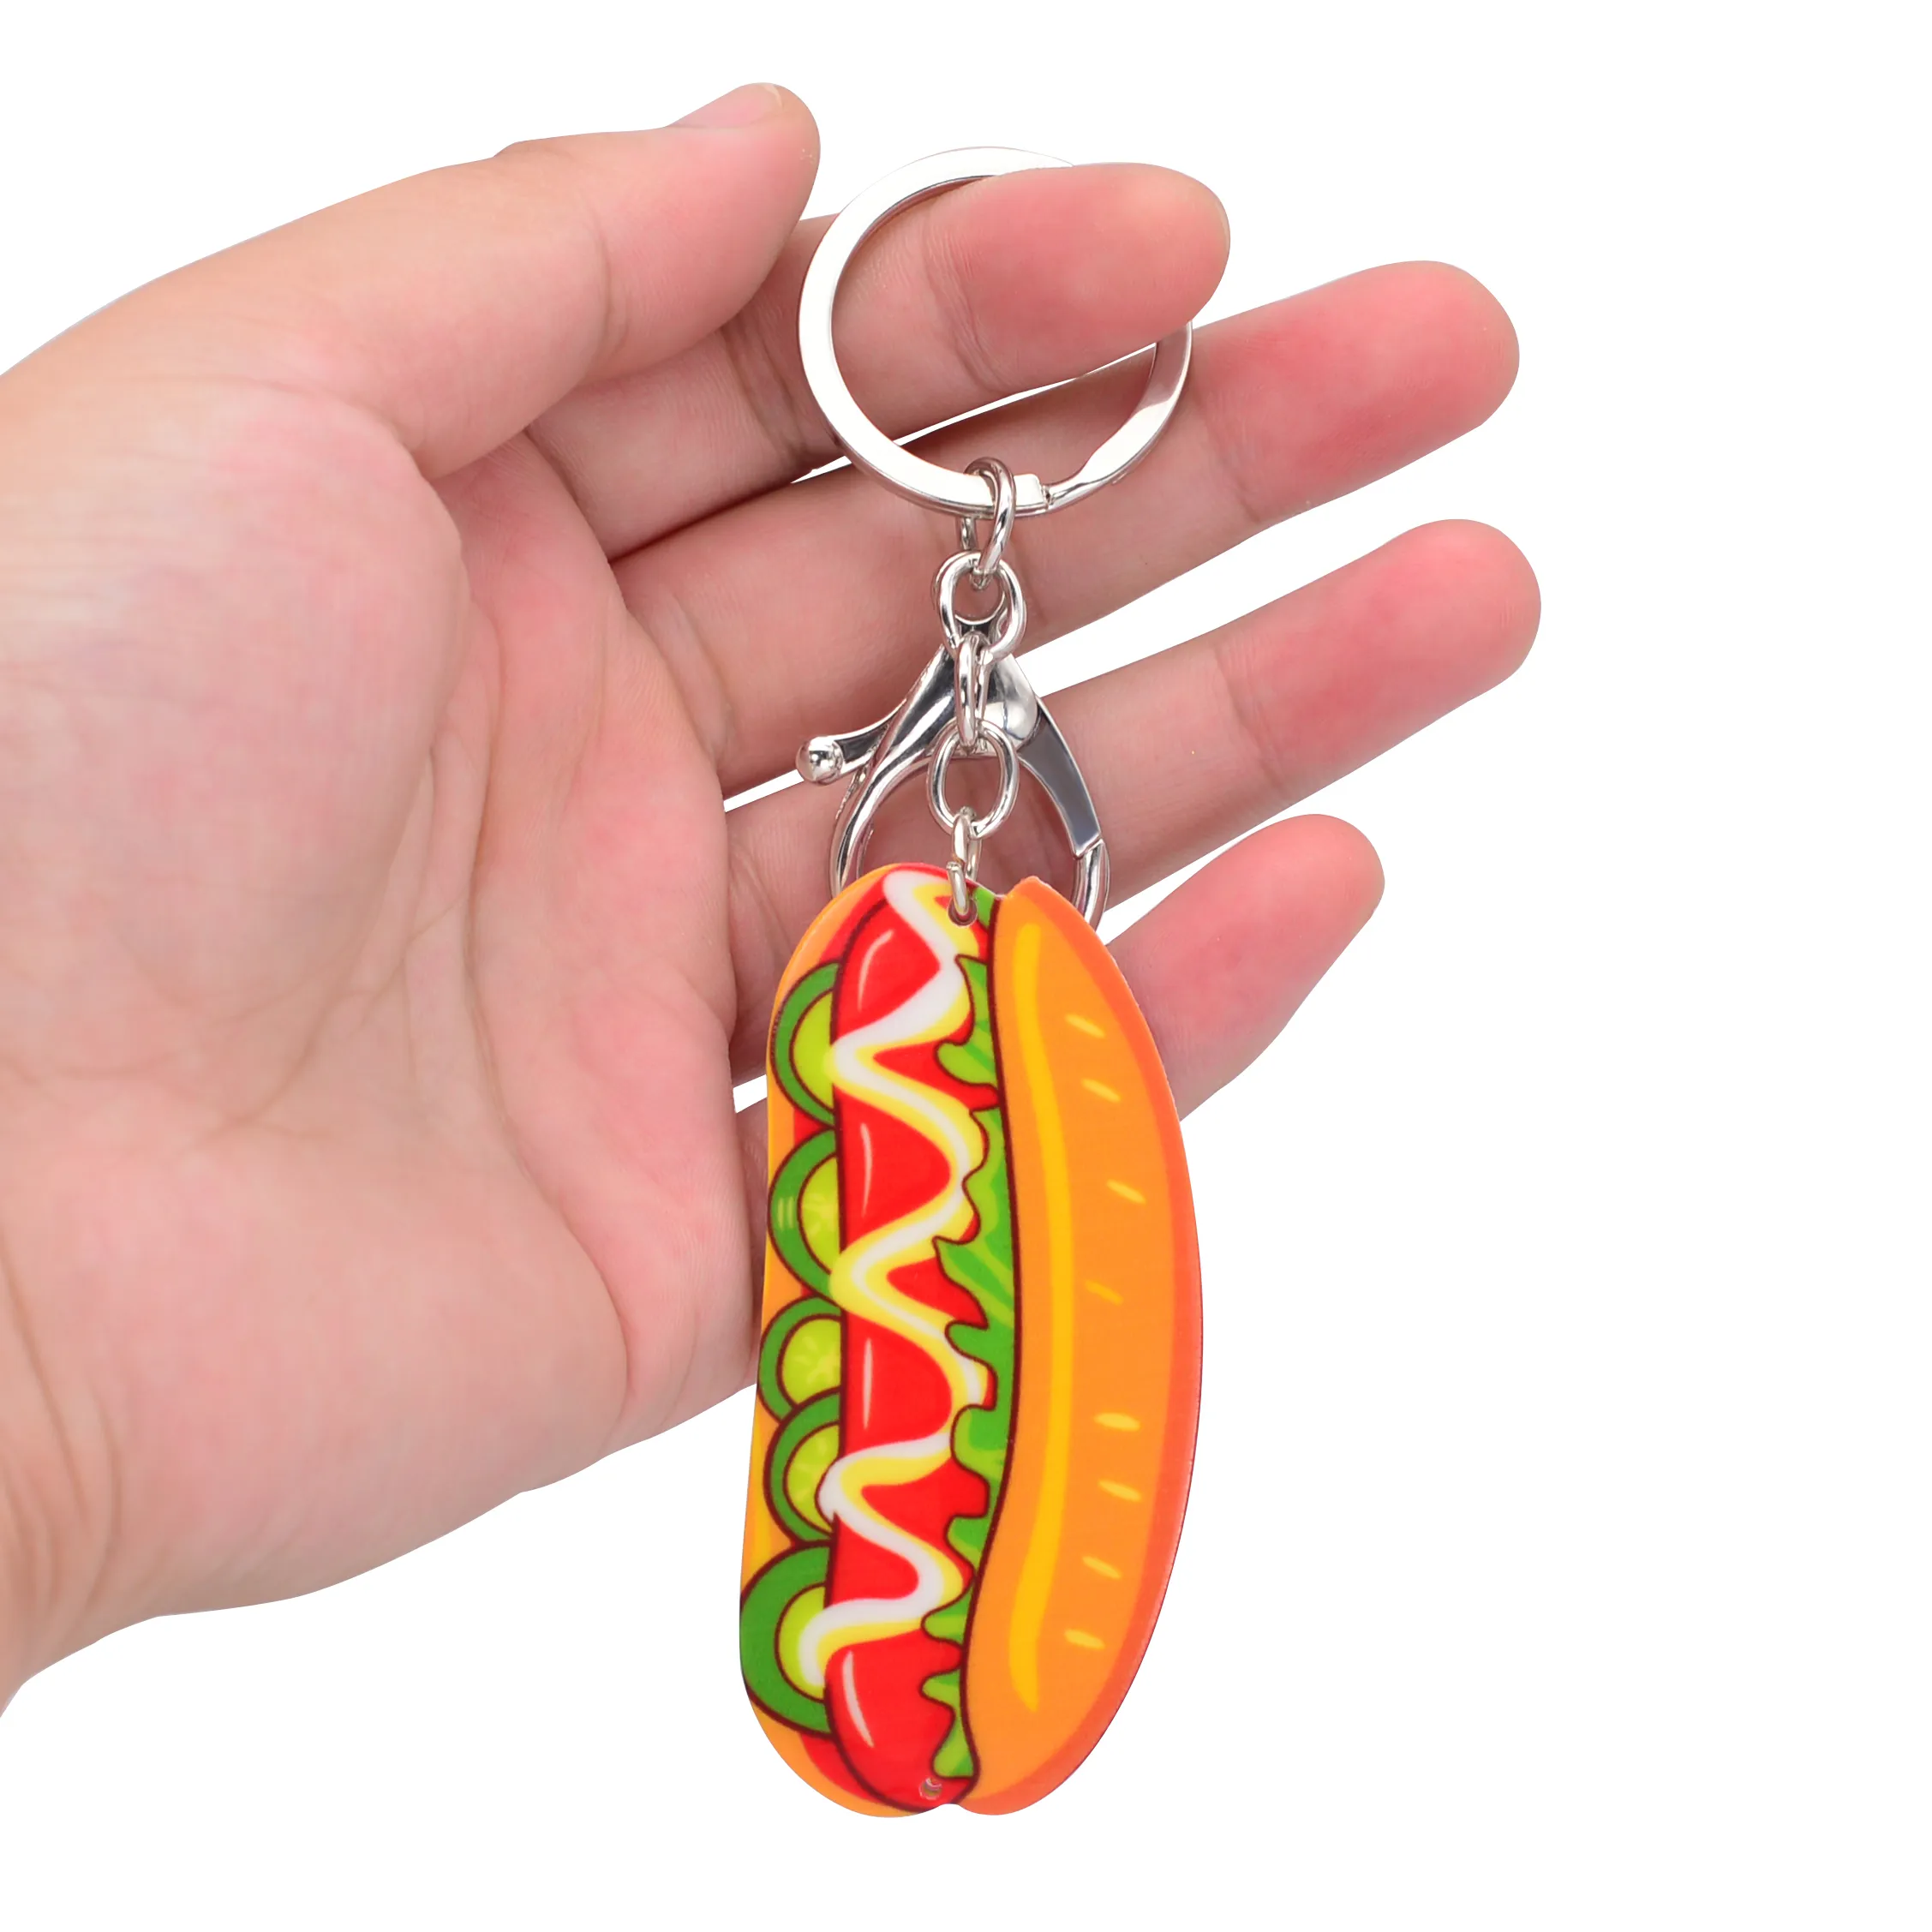 Cute Cartoon Acrylic Keychains Creative Food Hot Dog Key Chain Jewelry For Women Kids Girls Gift Car Accessory